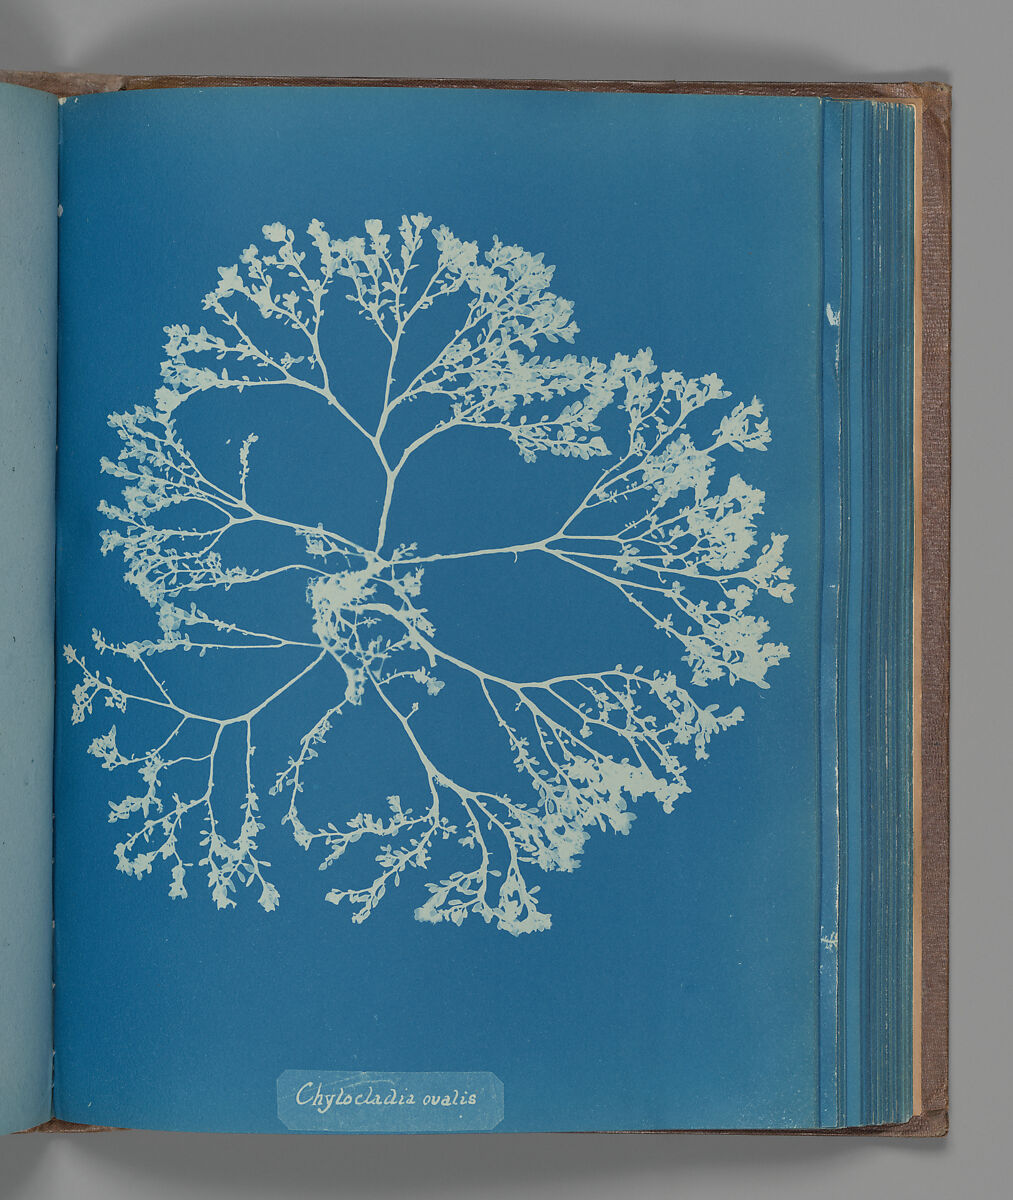 Chylocladia ovalis, Anna Atkins (British, 1799–1871), Cyanotype 